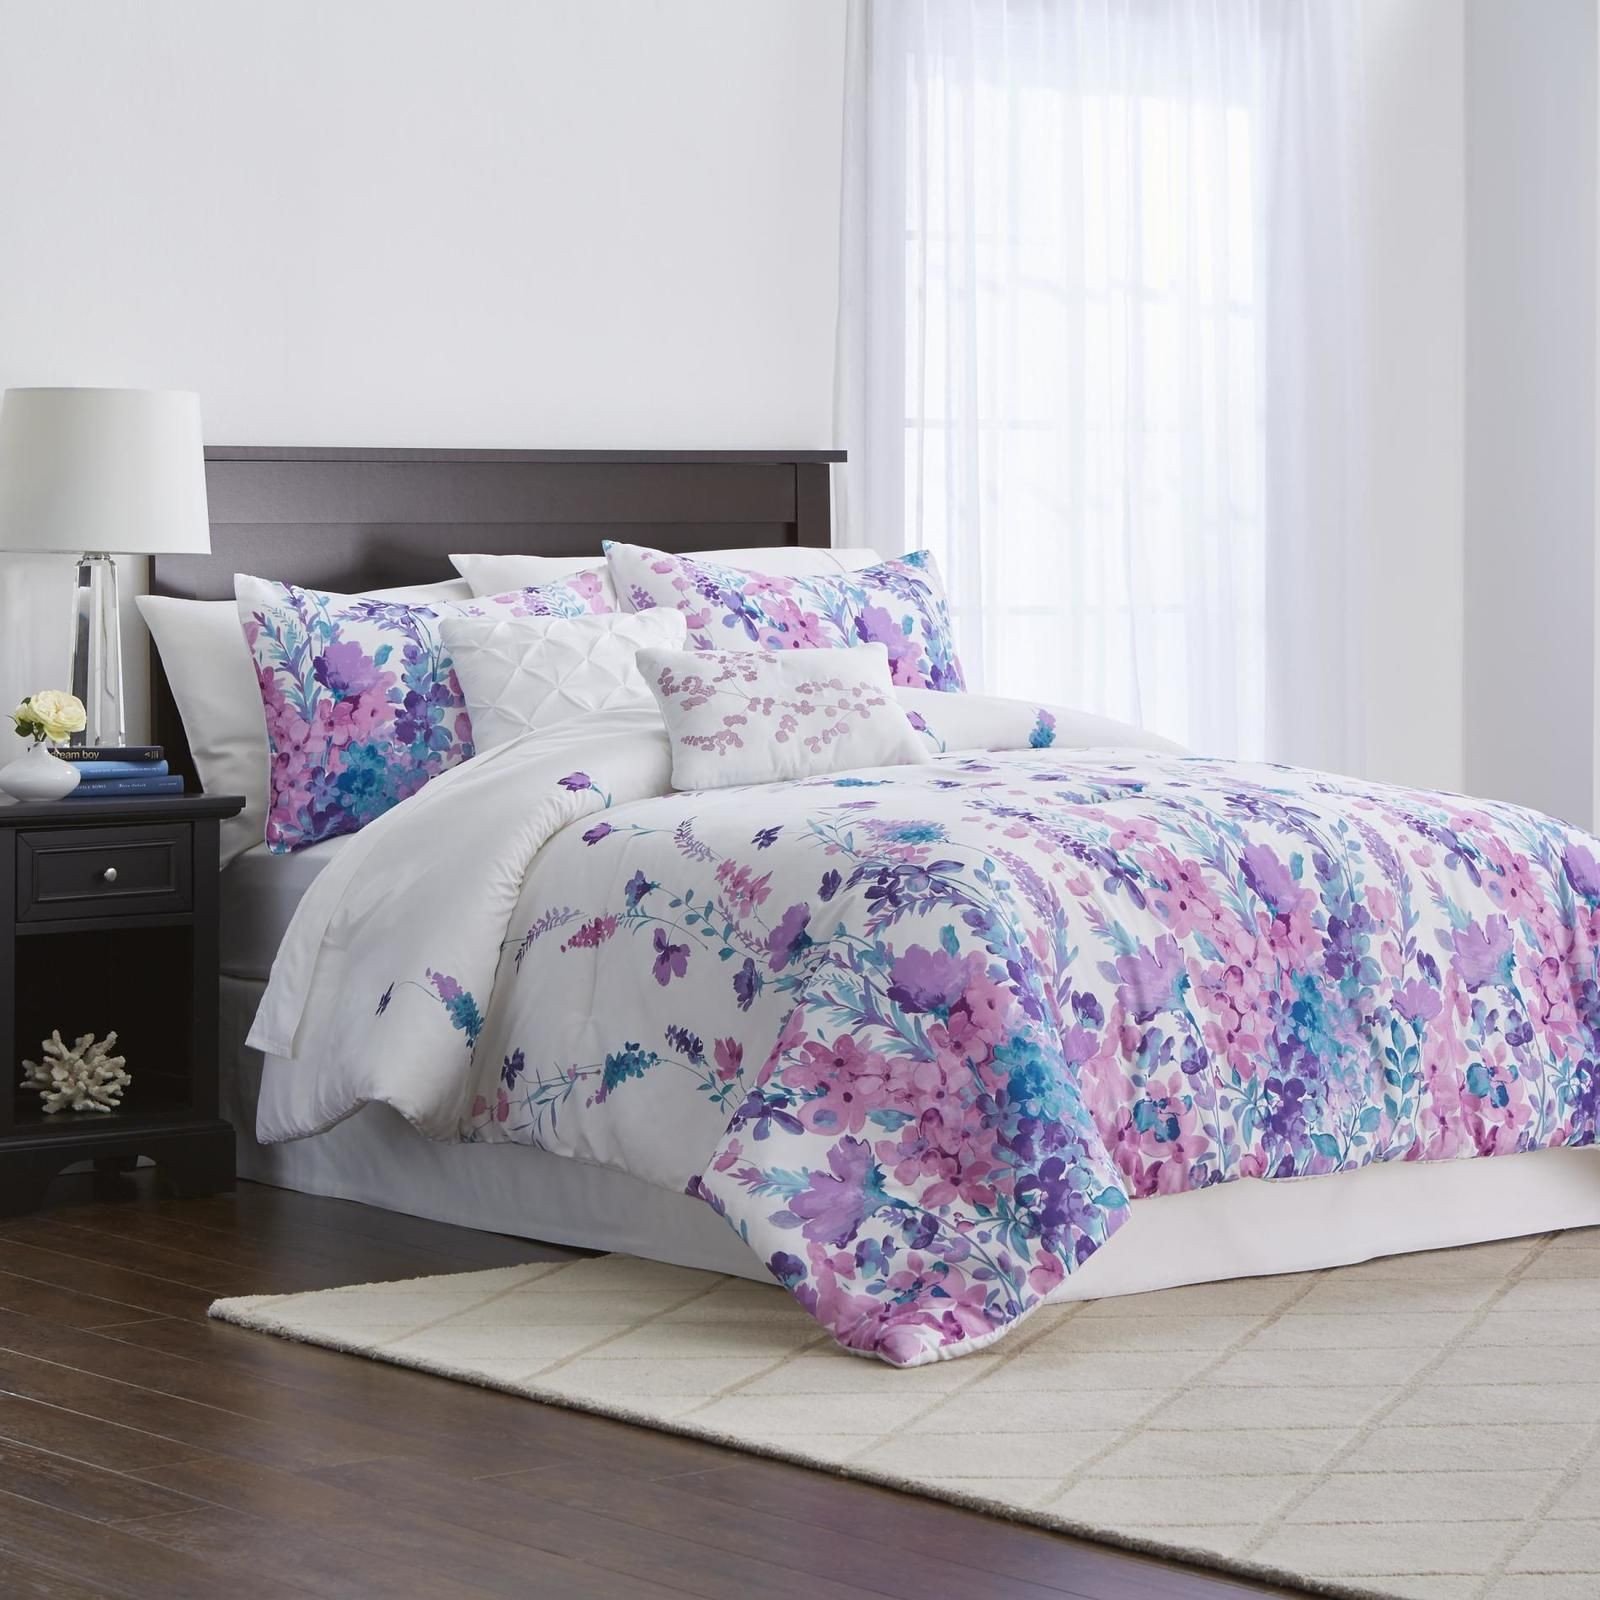 Sears Furniture Bedroom Set Luxury Colormate 5 Pc forter Set Garden Multi